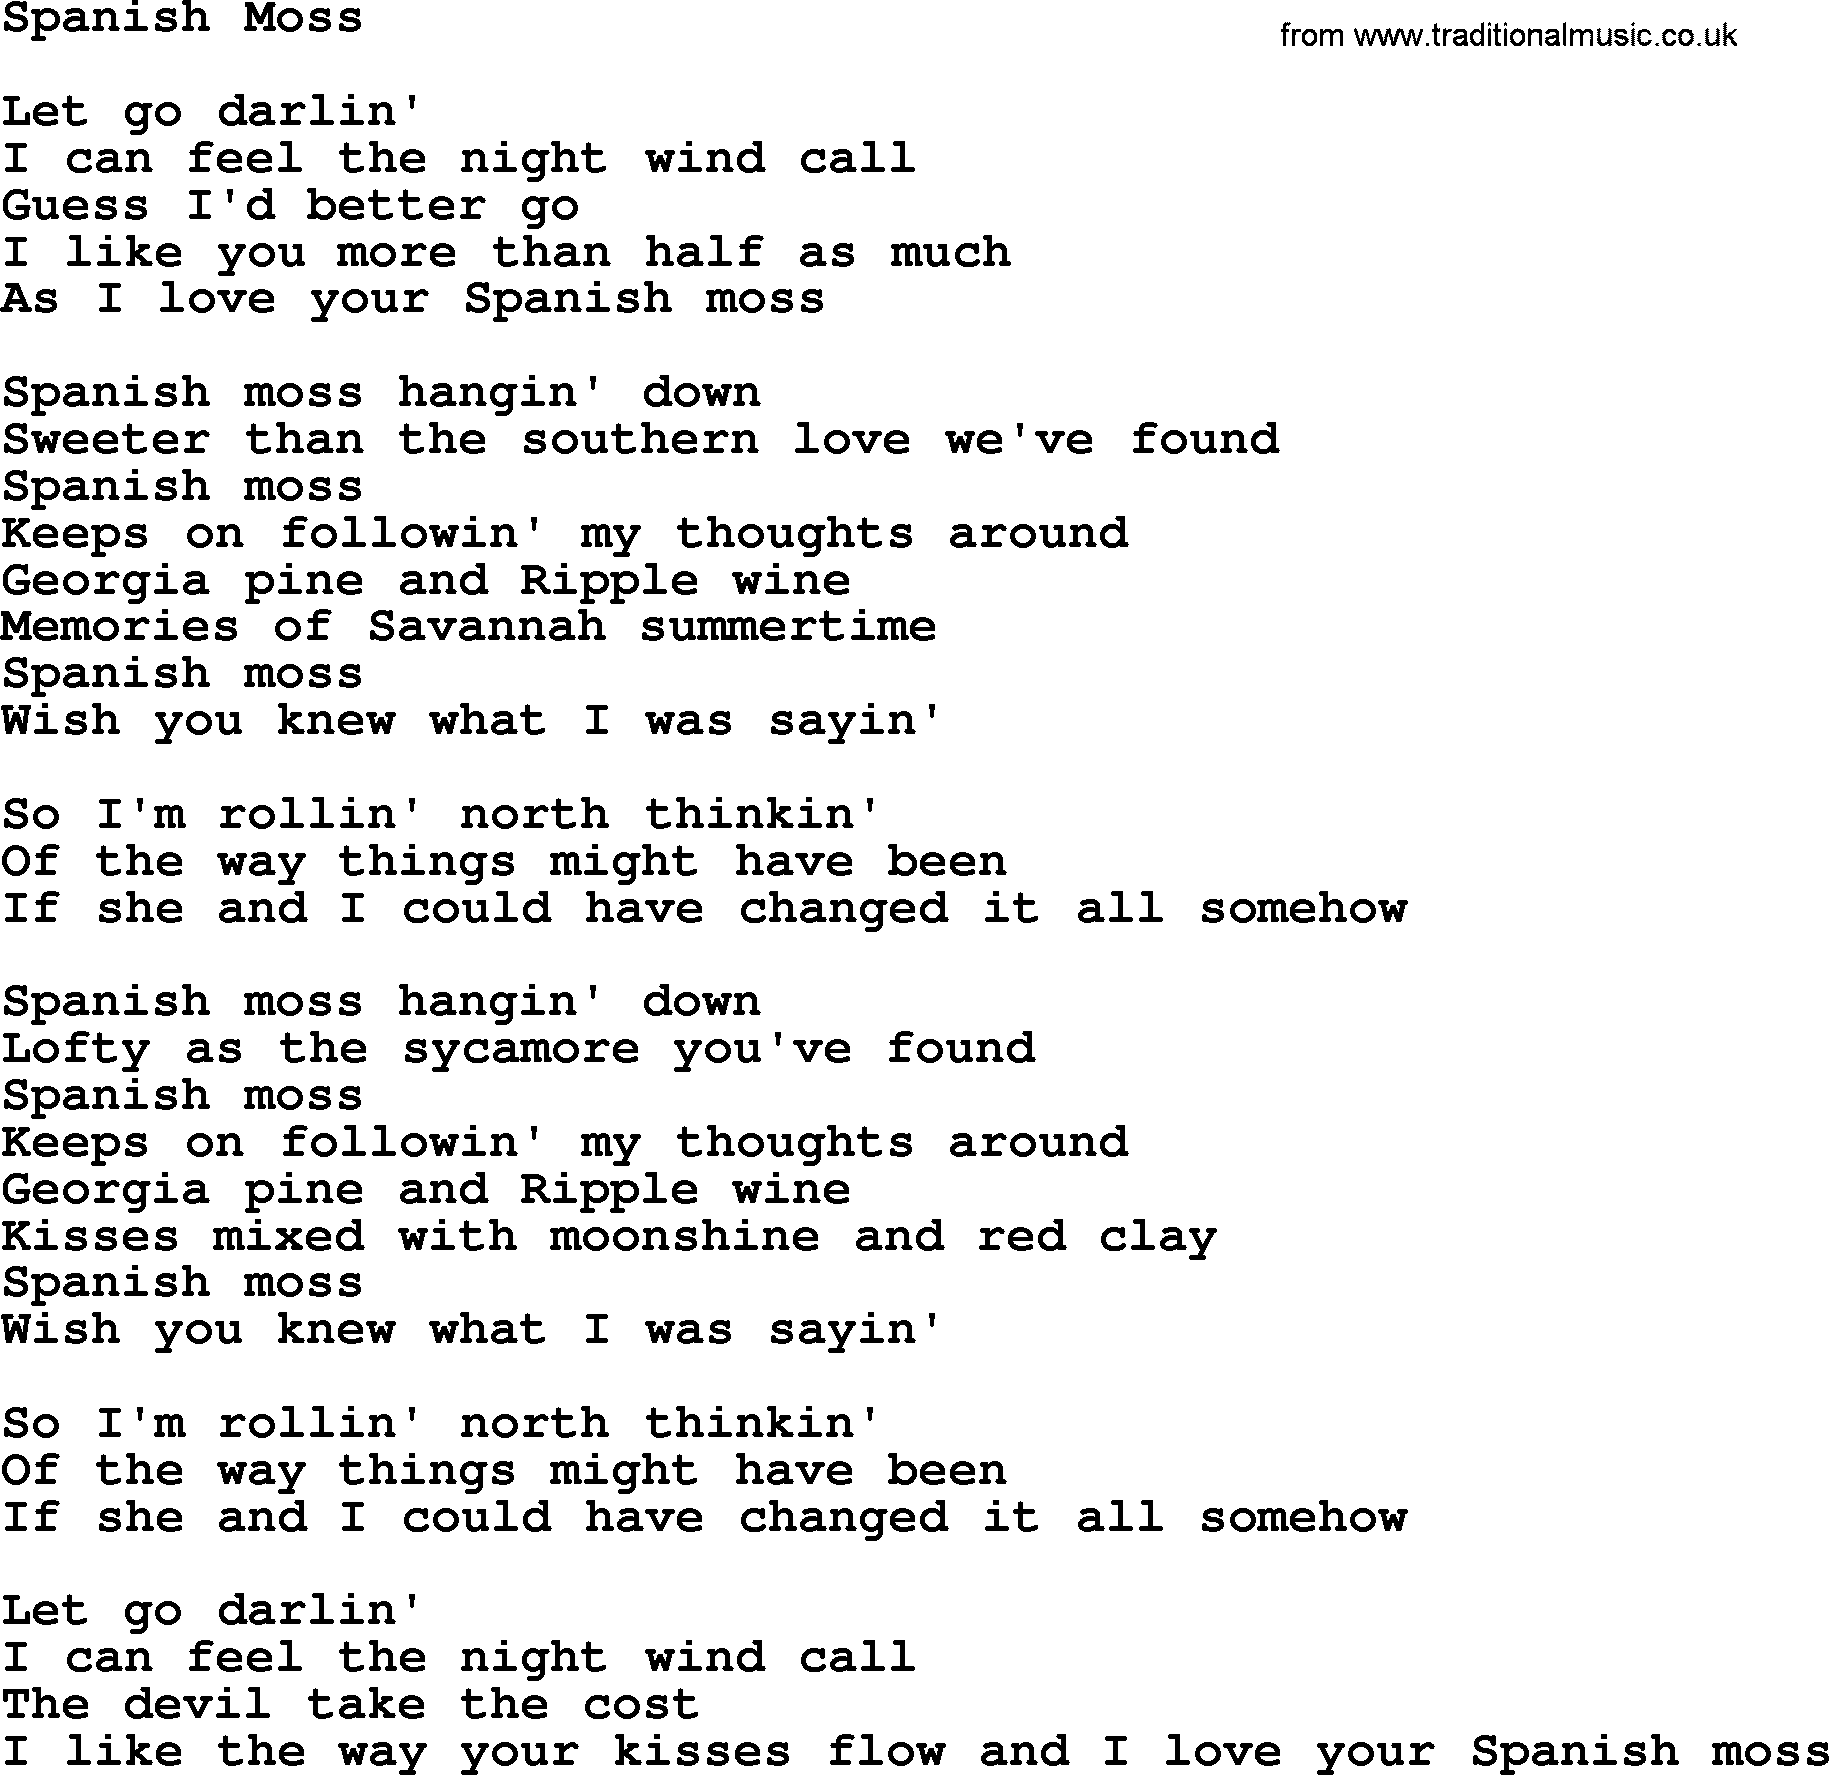 Gordon Lightfoot song Spanish Moss, lyrics